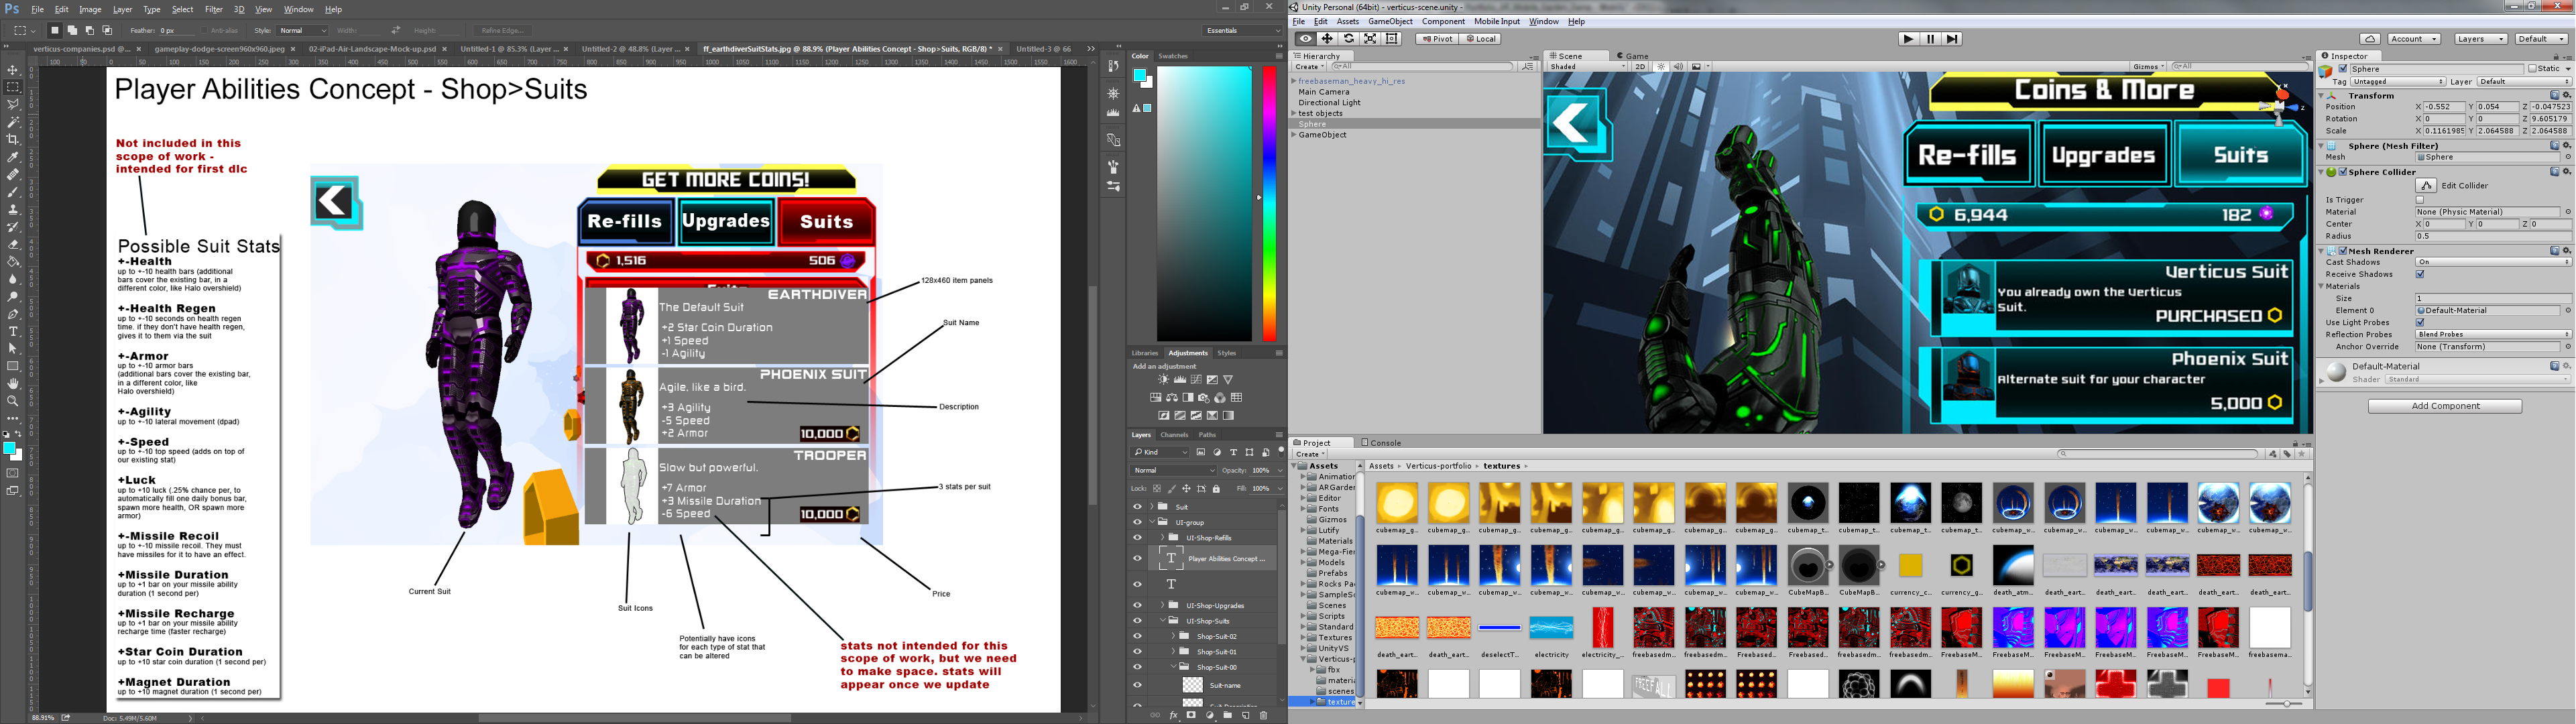 Screenshots of in-progress Photoshop mockup and UI development in Unity of Verticus Suit Abilities